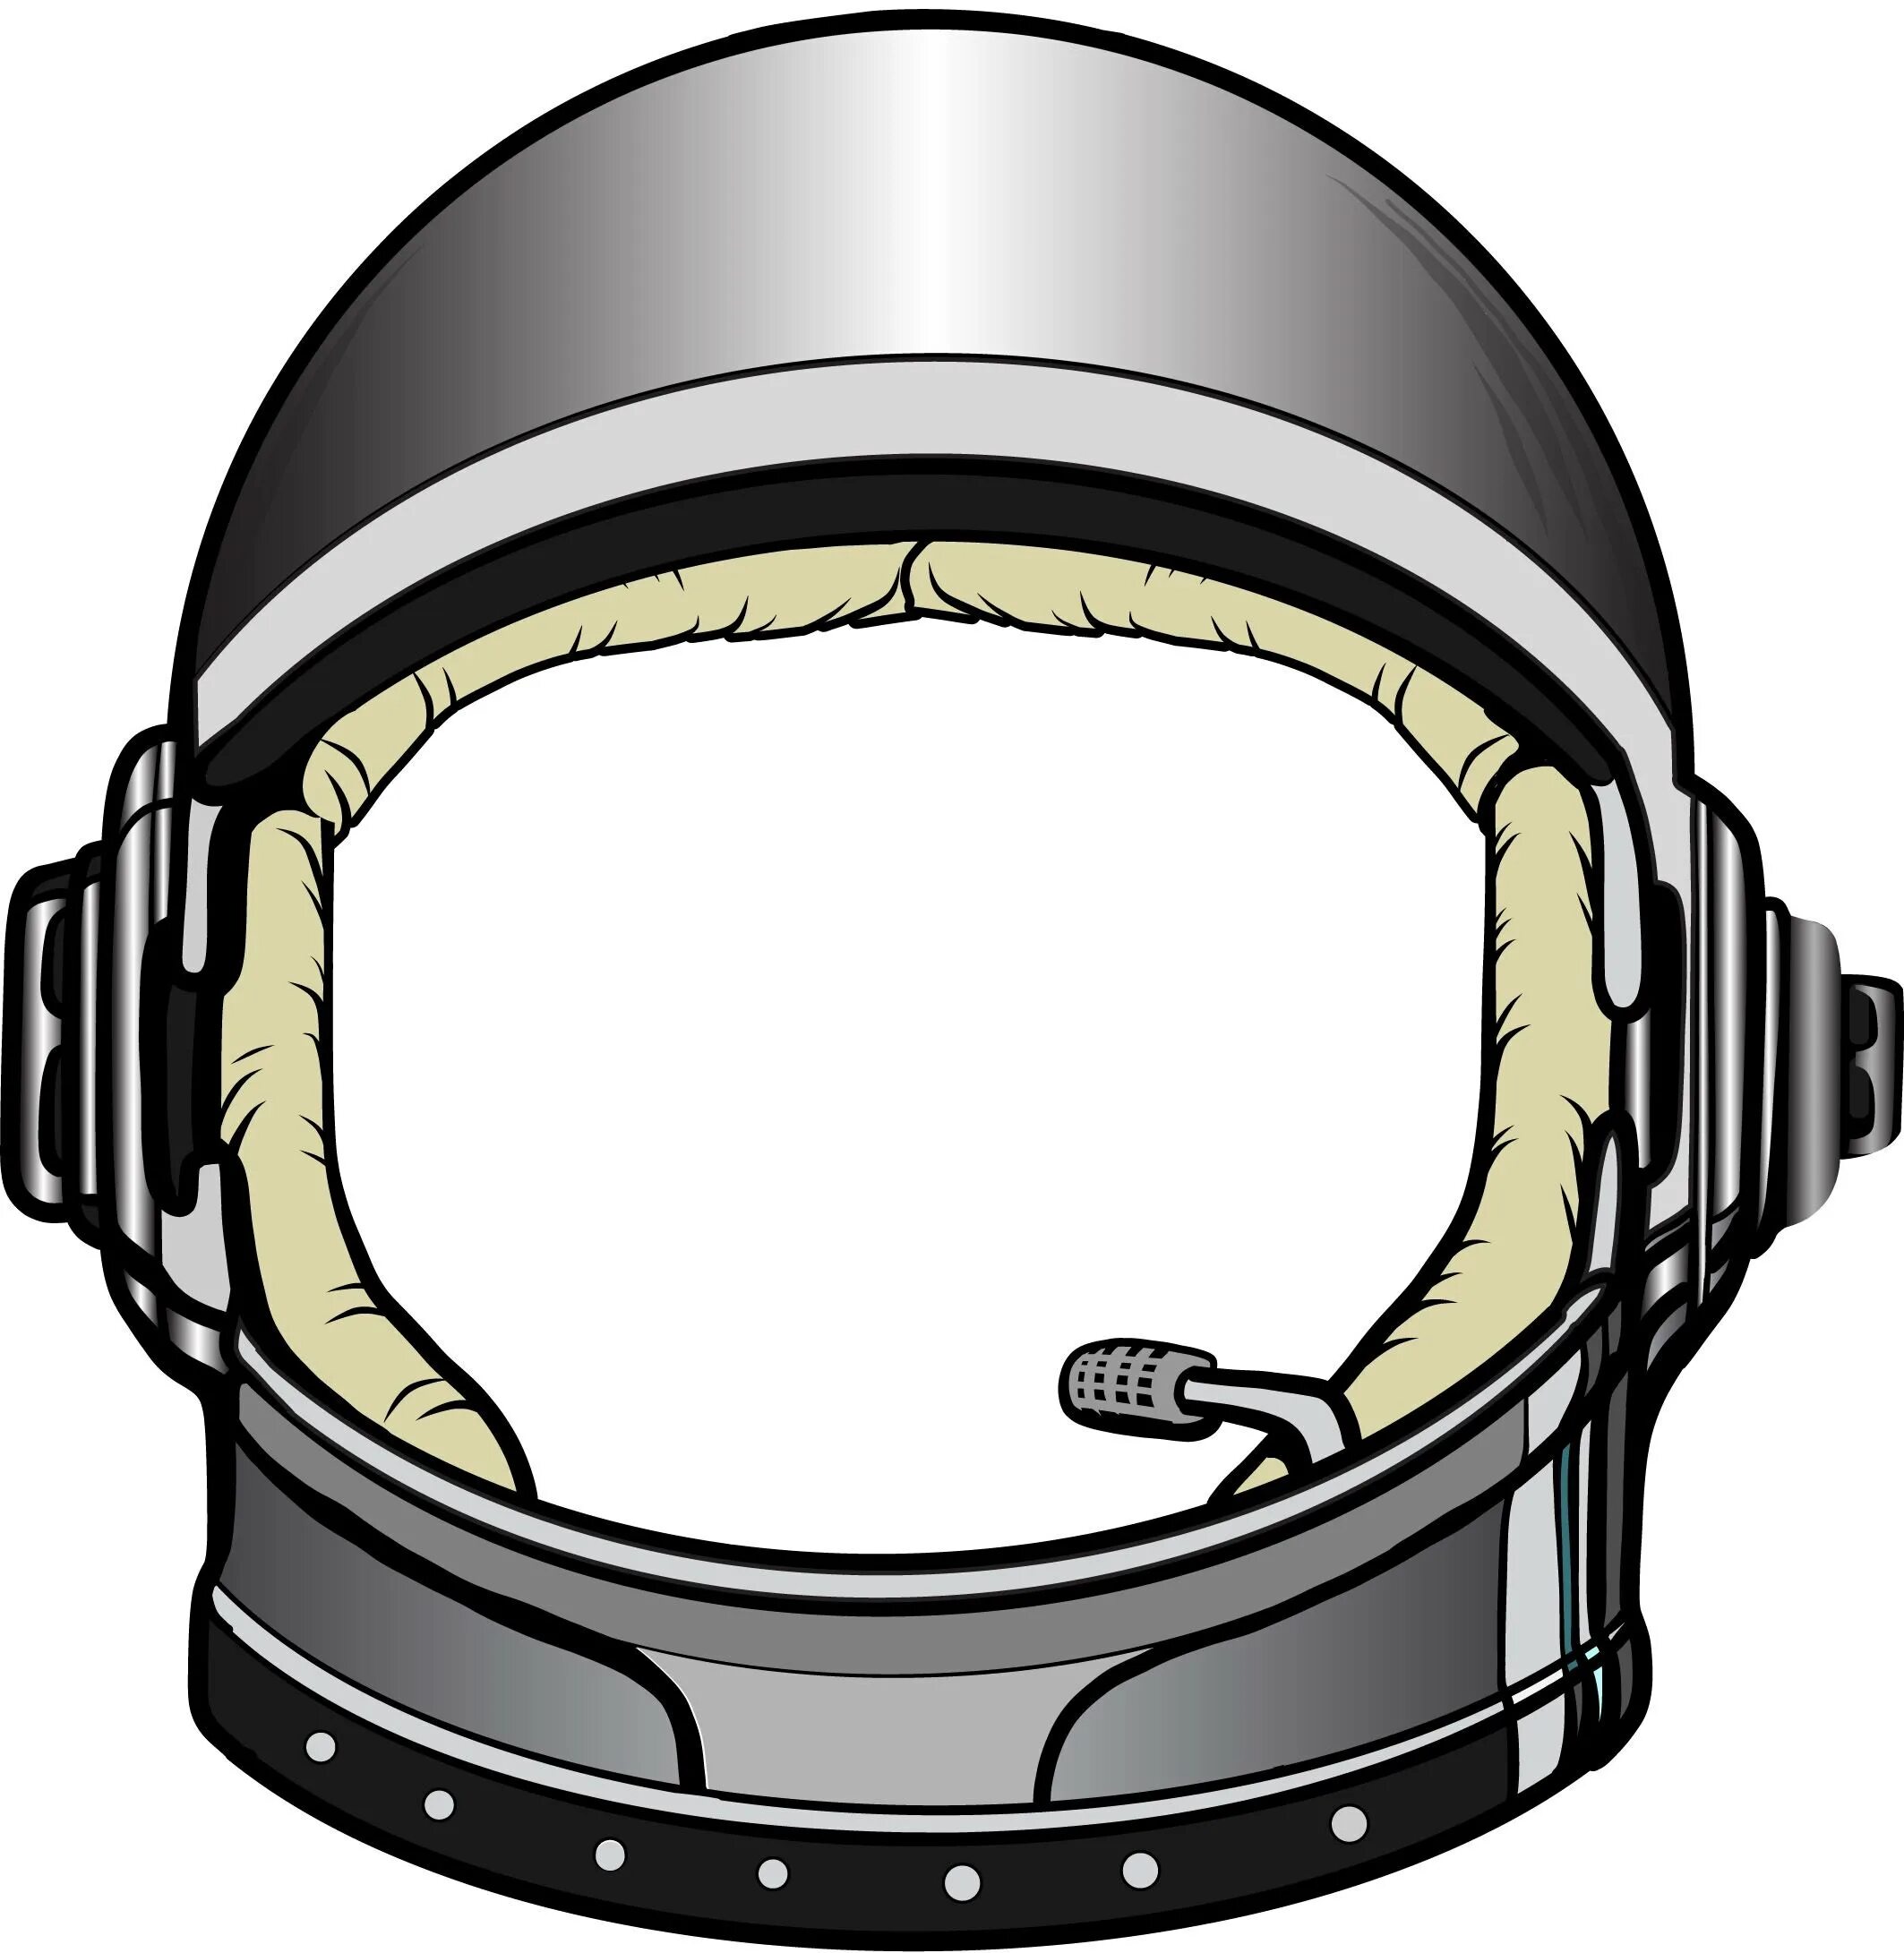 Шлем Astronaut Helmet. Шлем скафандра Космонавта. Шлем Космонавта SD IFI. Отражение в шлеме Космонавта сбоку. Шаблон шлема космонавта для фотосессии